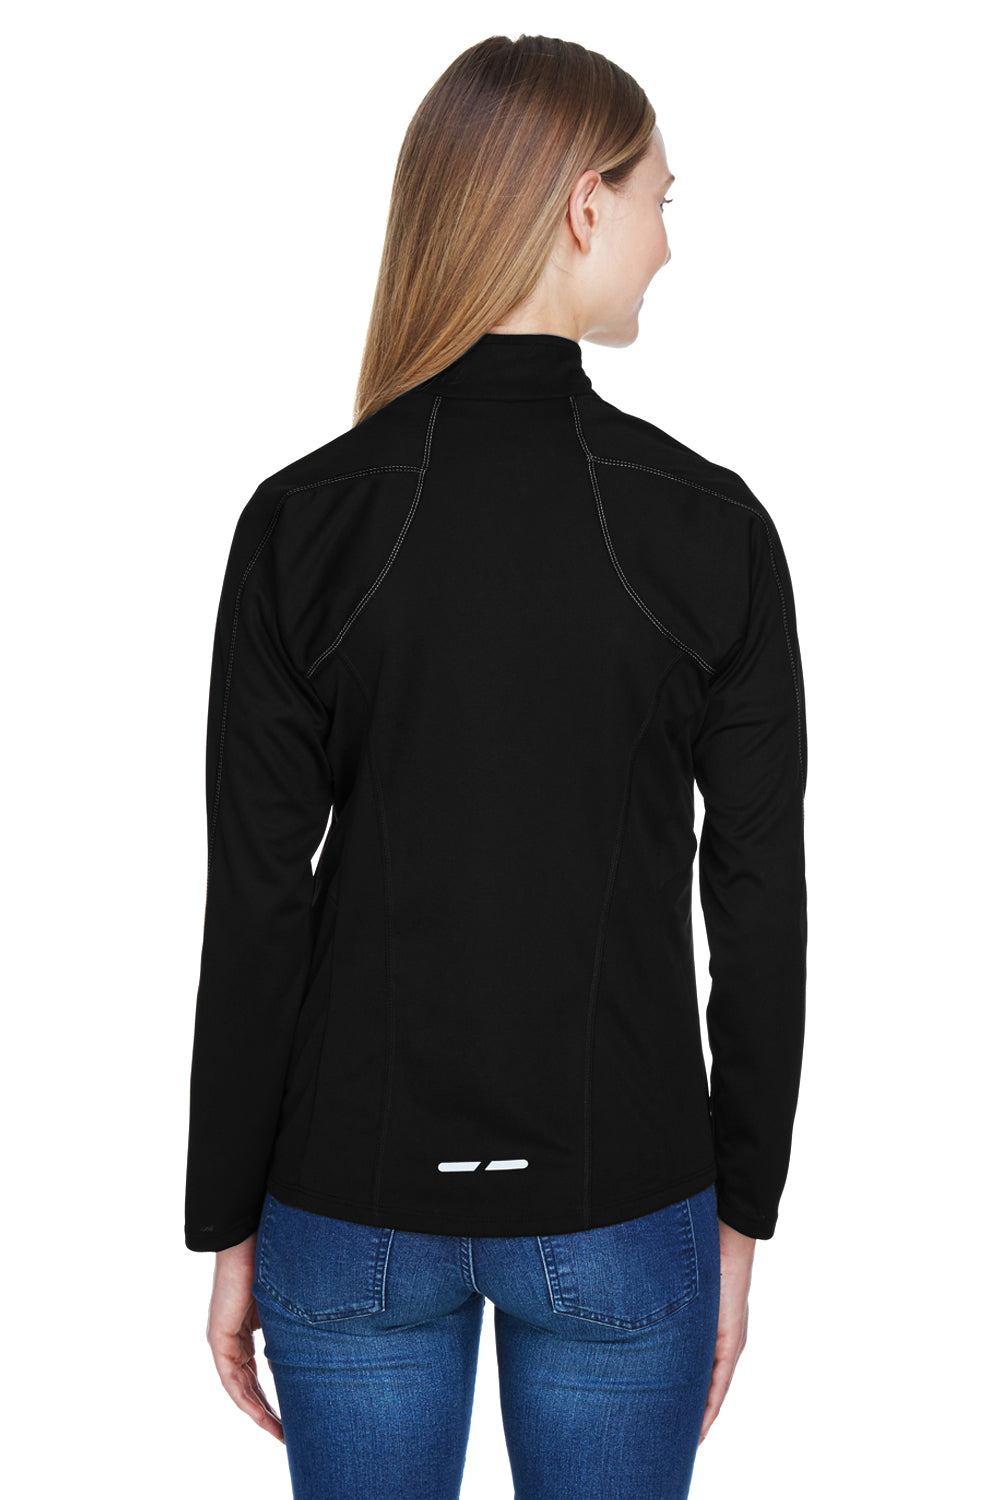 North End 78187 Womens Radar Performance Moisture Wicking 1/4 Zip Sweatshirt Black Back